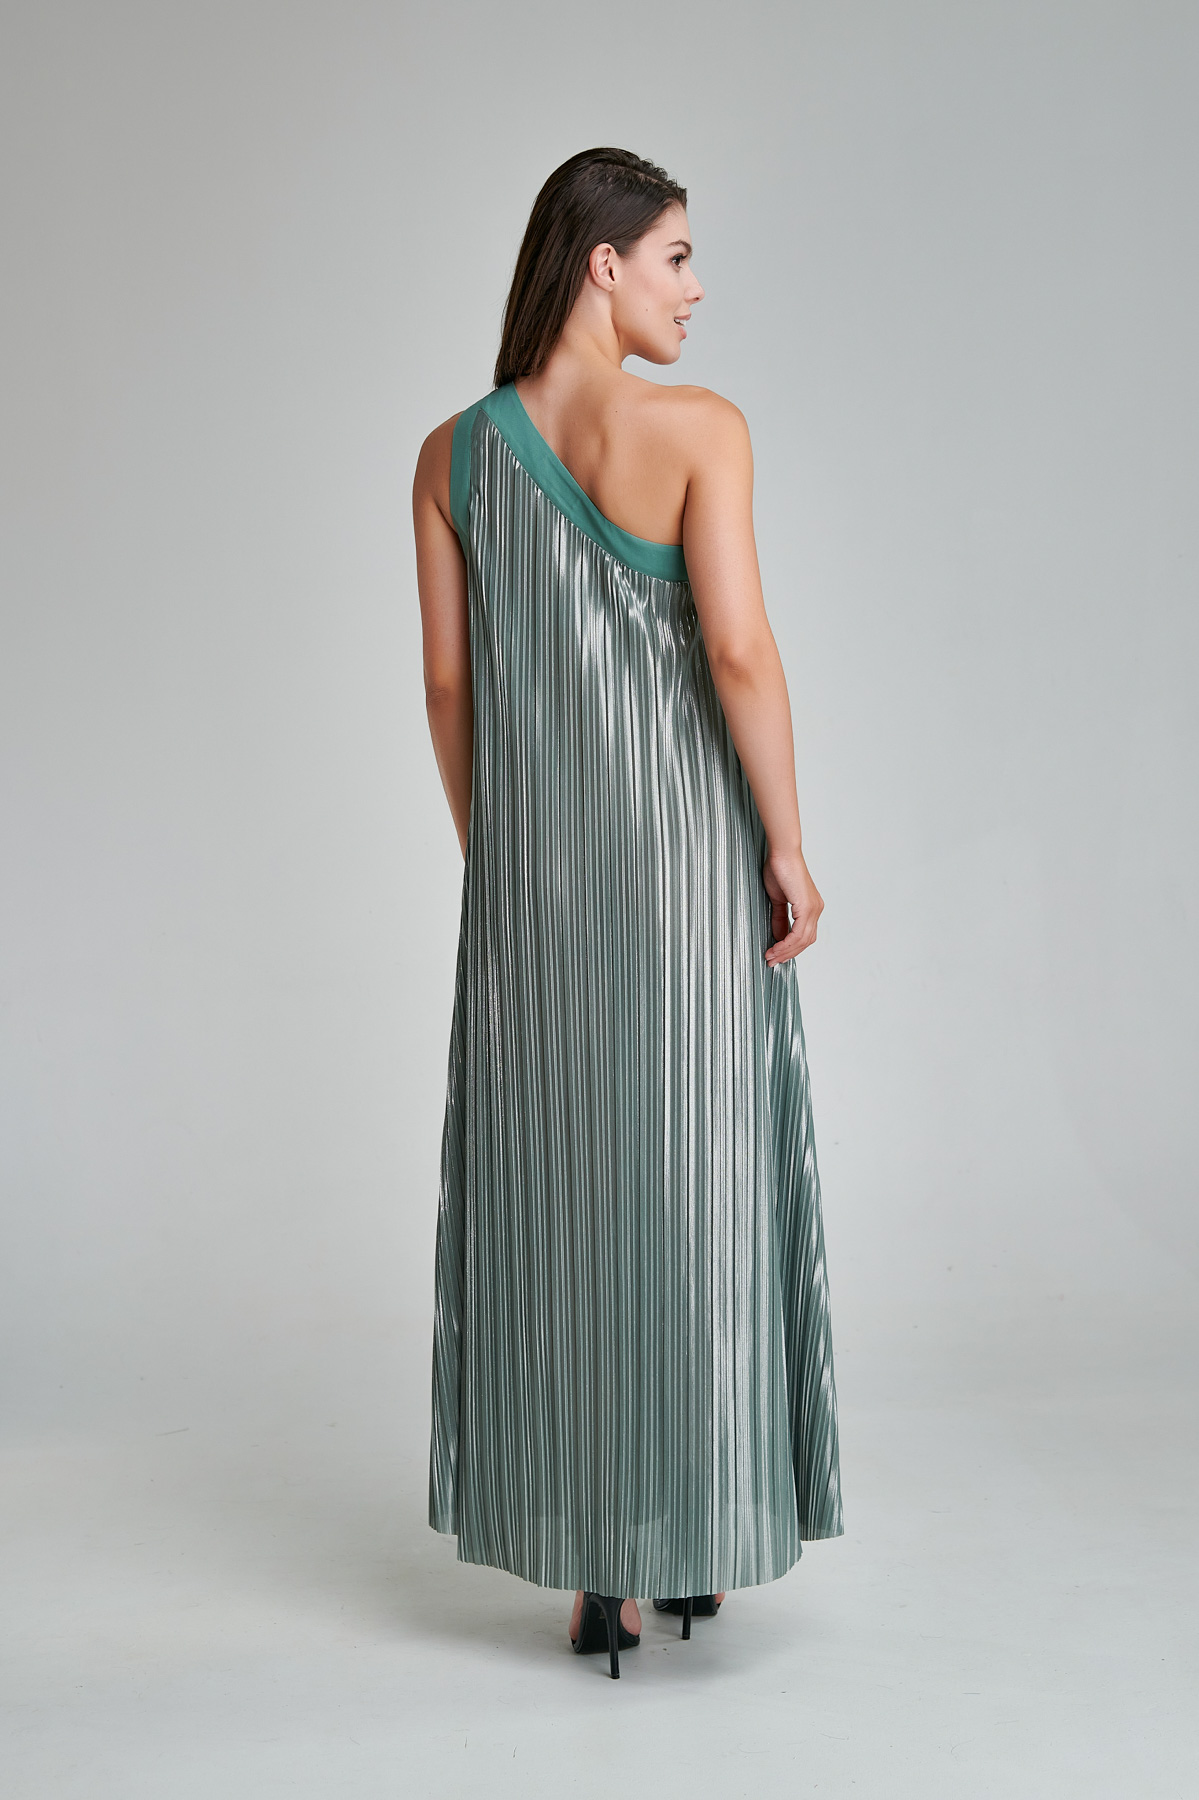 Elegant pleated dress DILMA green with asymmetrical neckline. Natural fabrics, original design, handmade embroidery